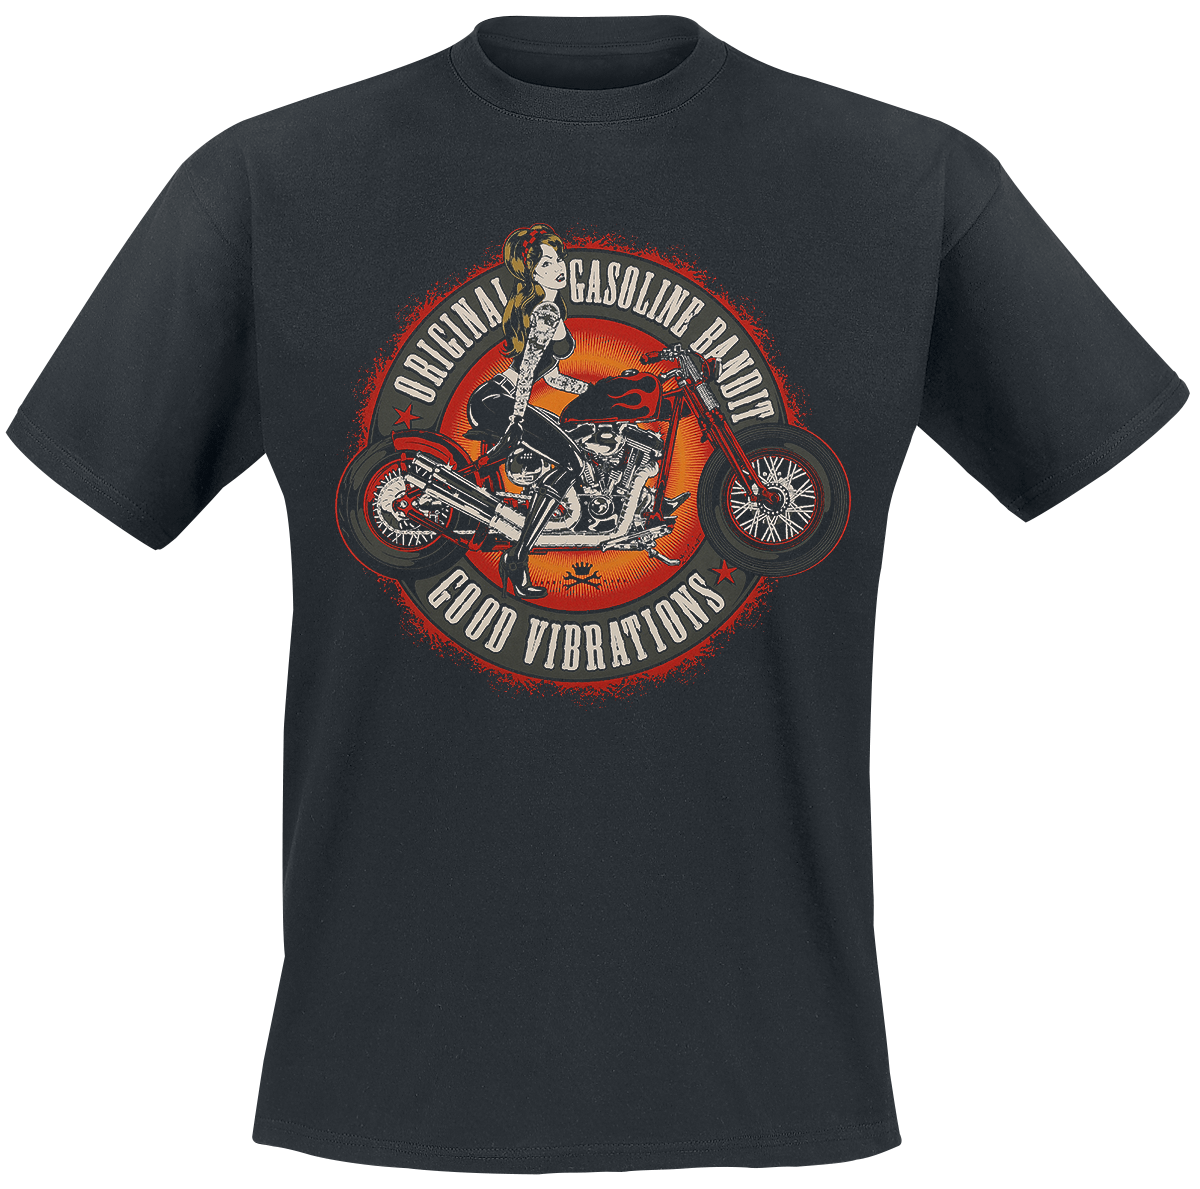 Gasoline Bandit - Good Vibrations - T-Shirt - schwarz